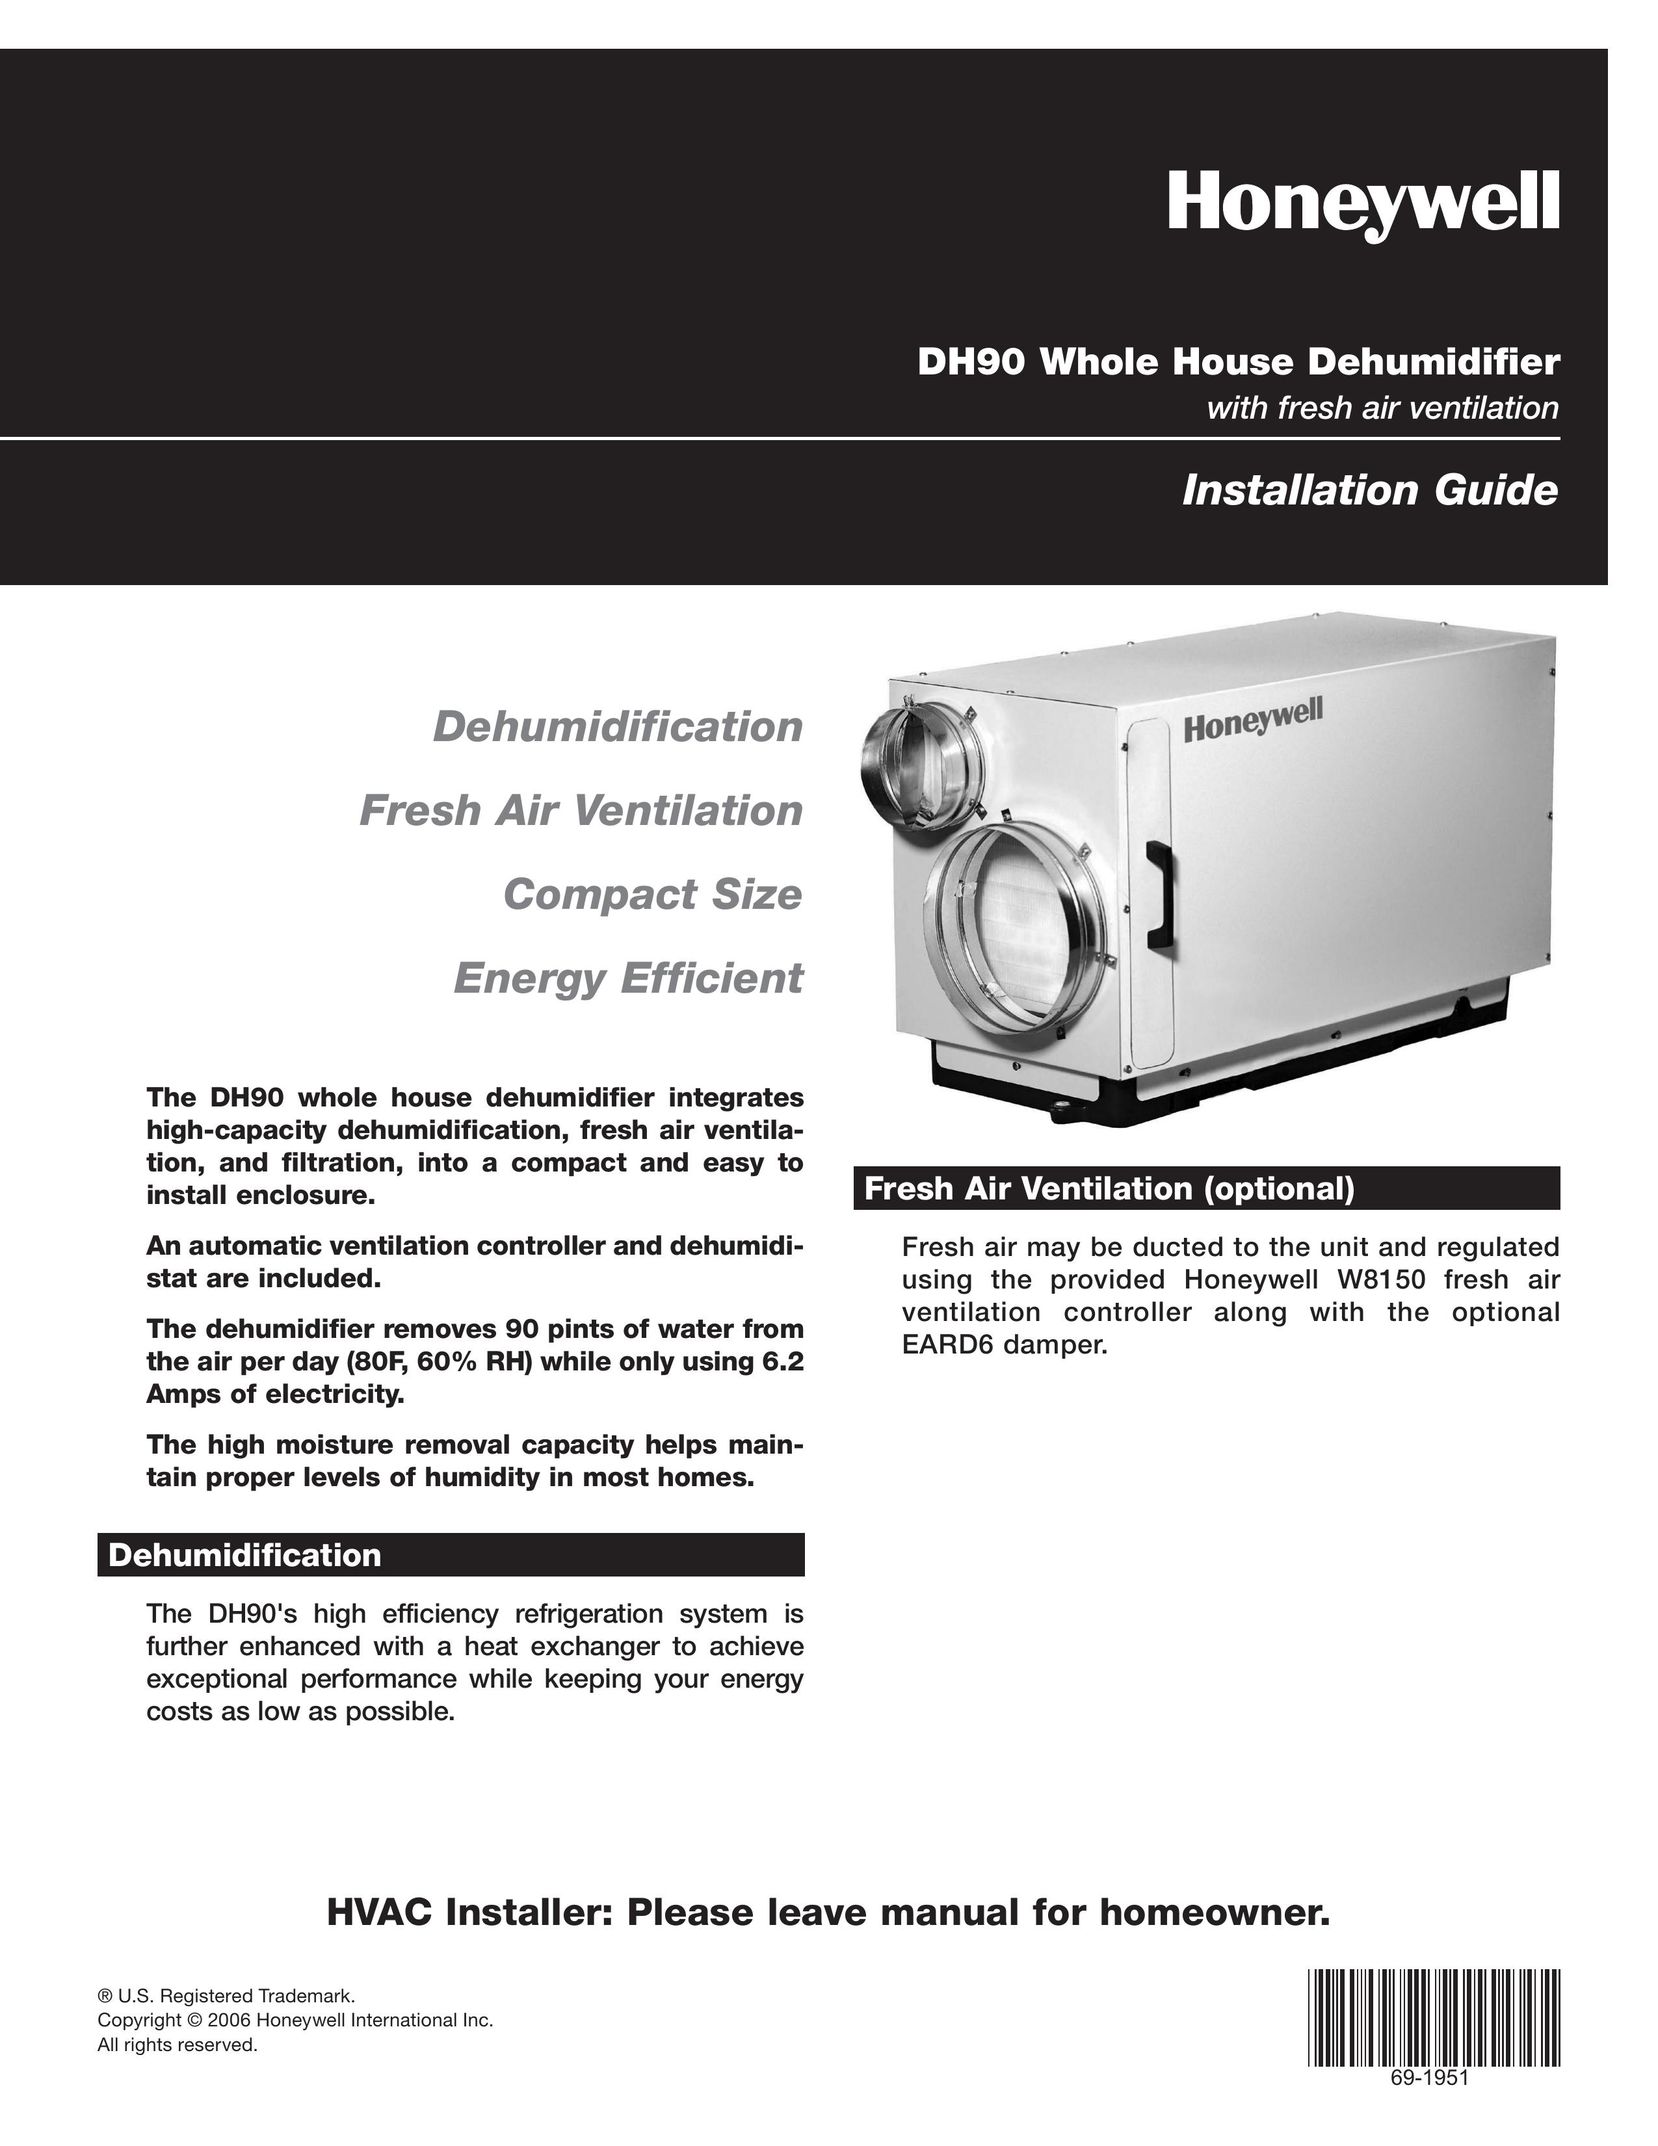 Honeywell DH90 Dehumidifier User Manual